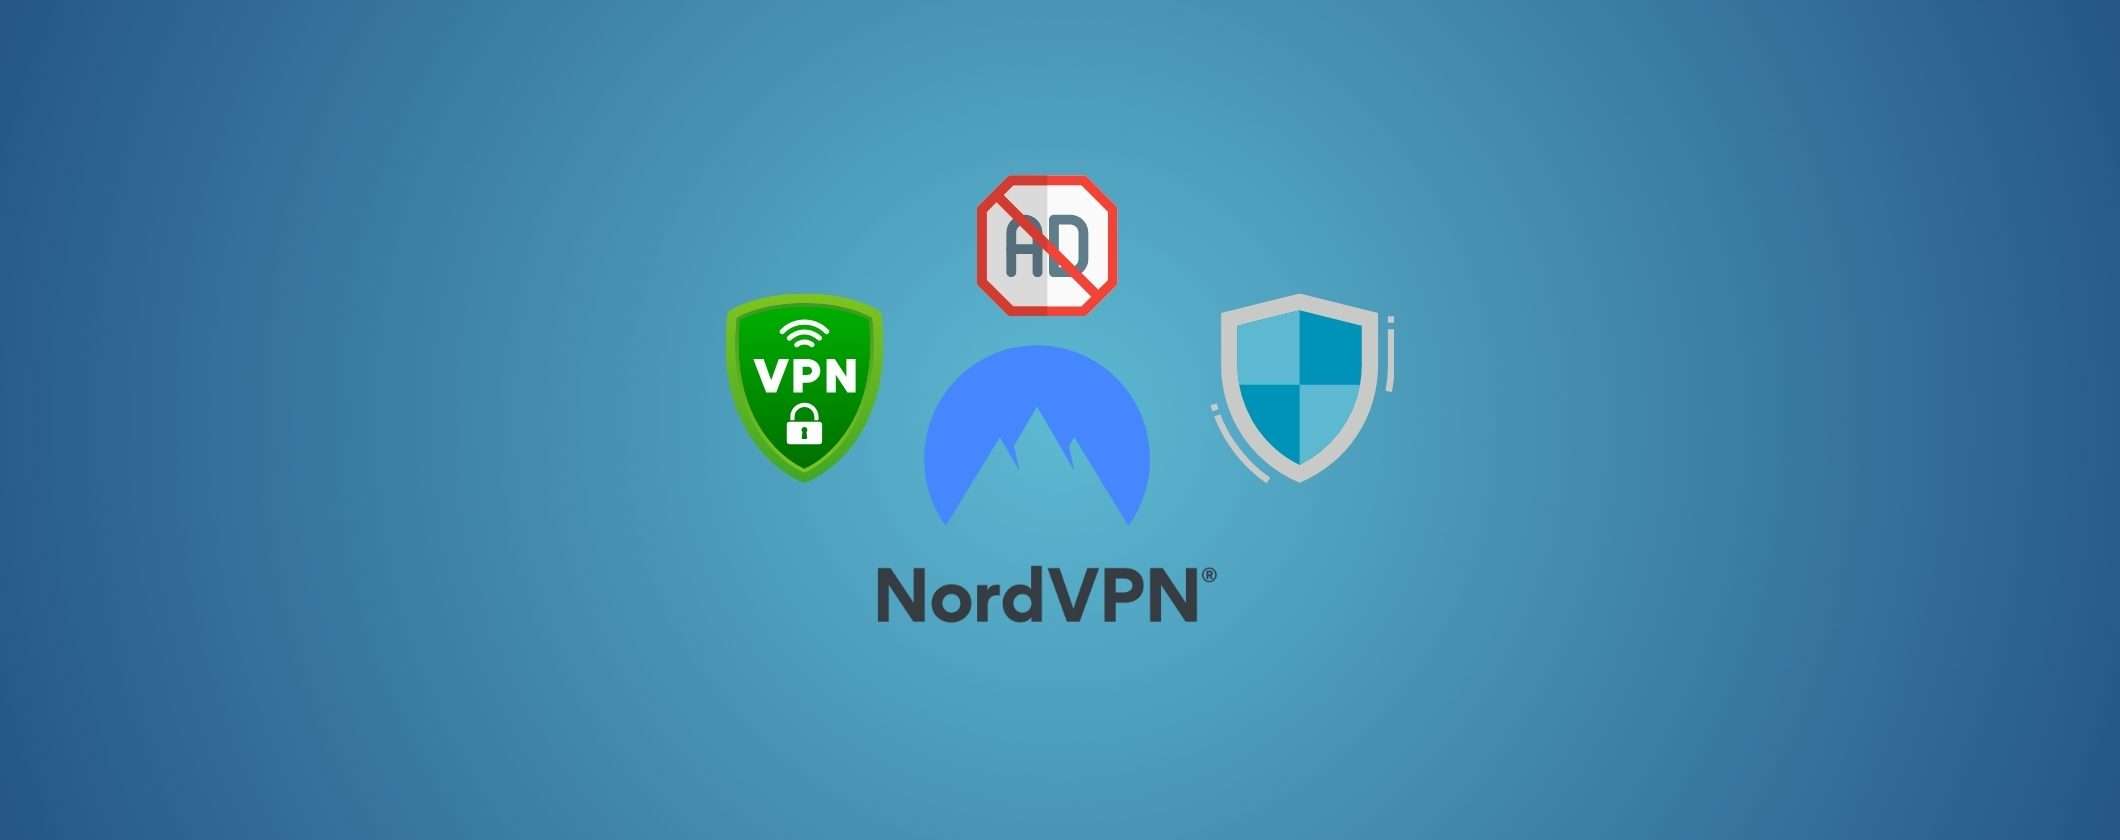 NordVPN: VPN, Antivirus, Ad Blocker a PREZZO FOLLE